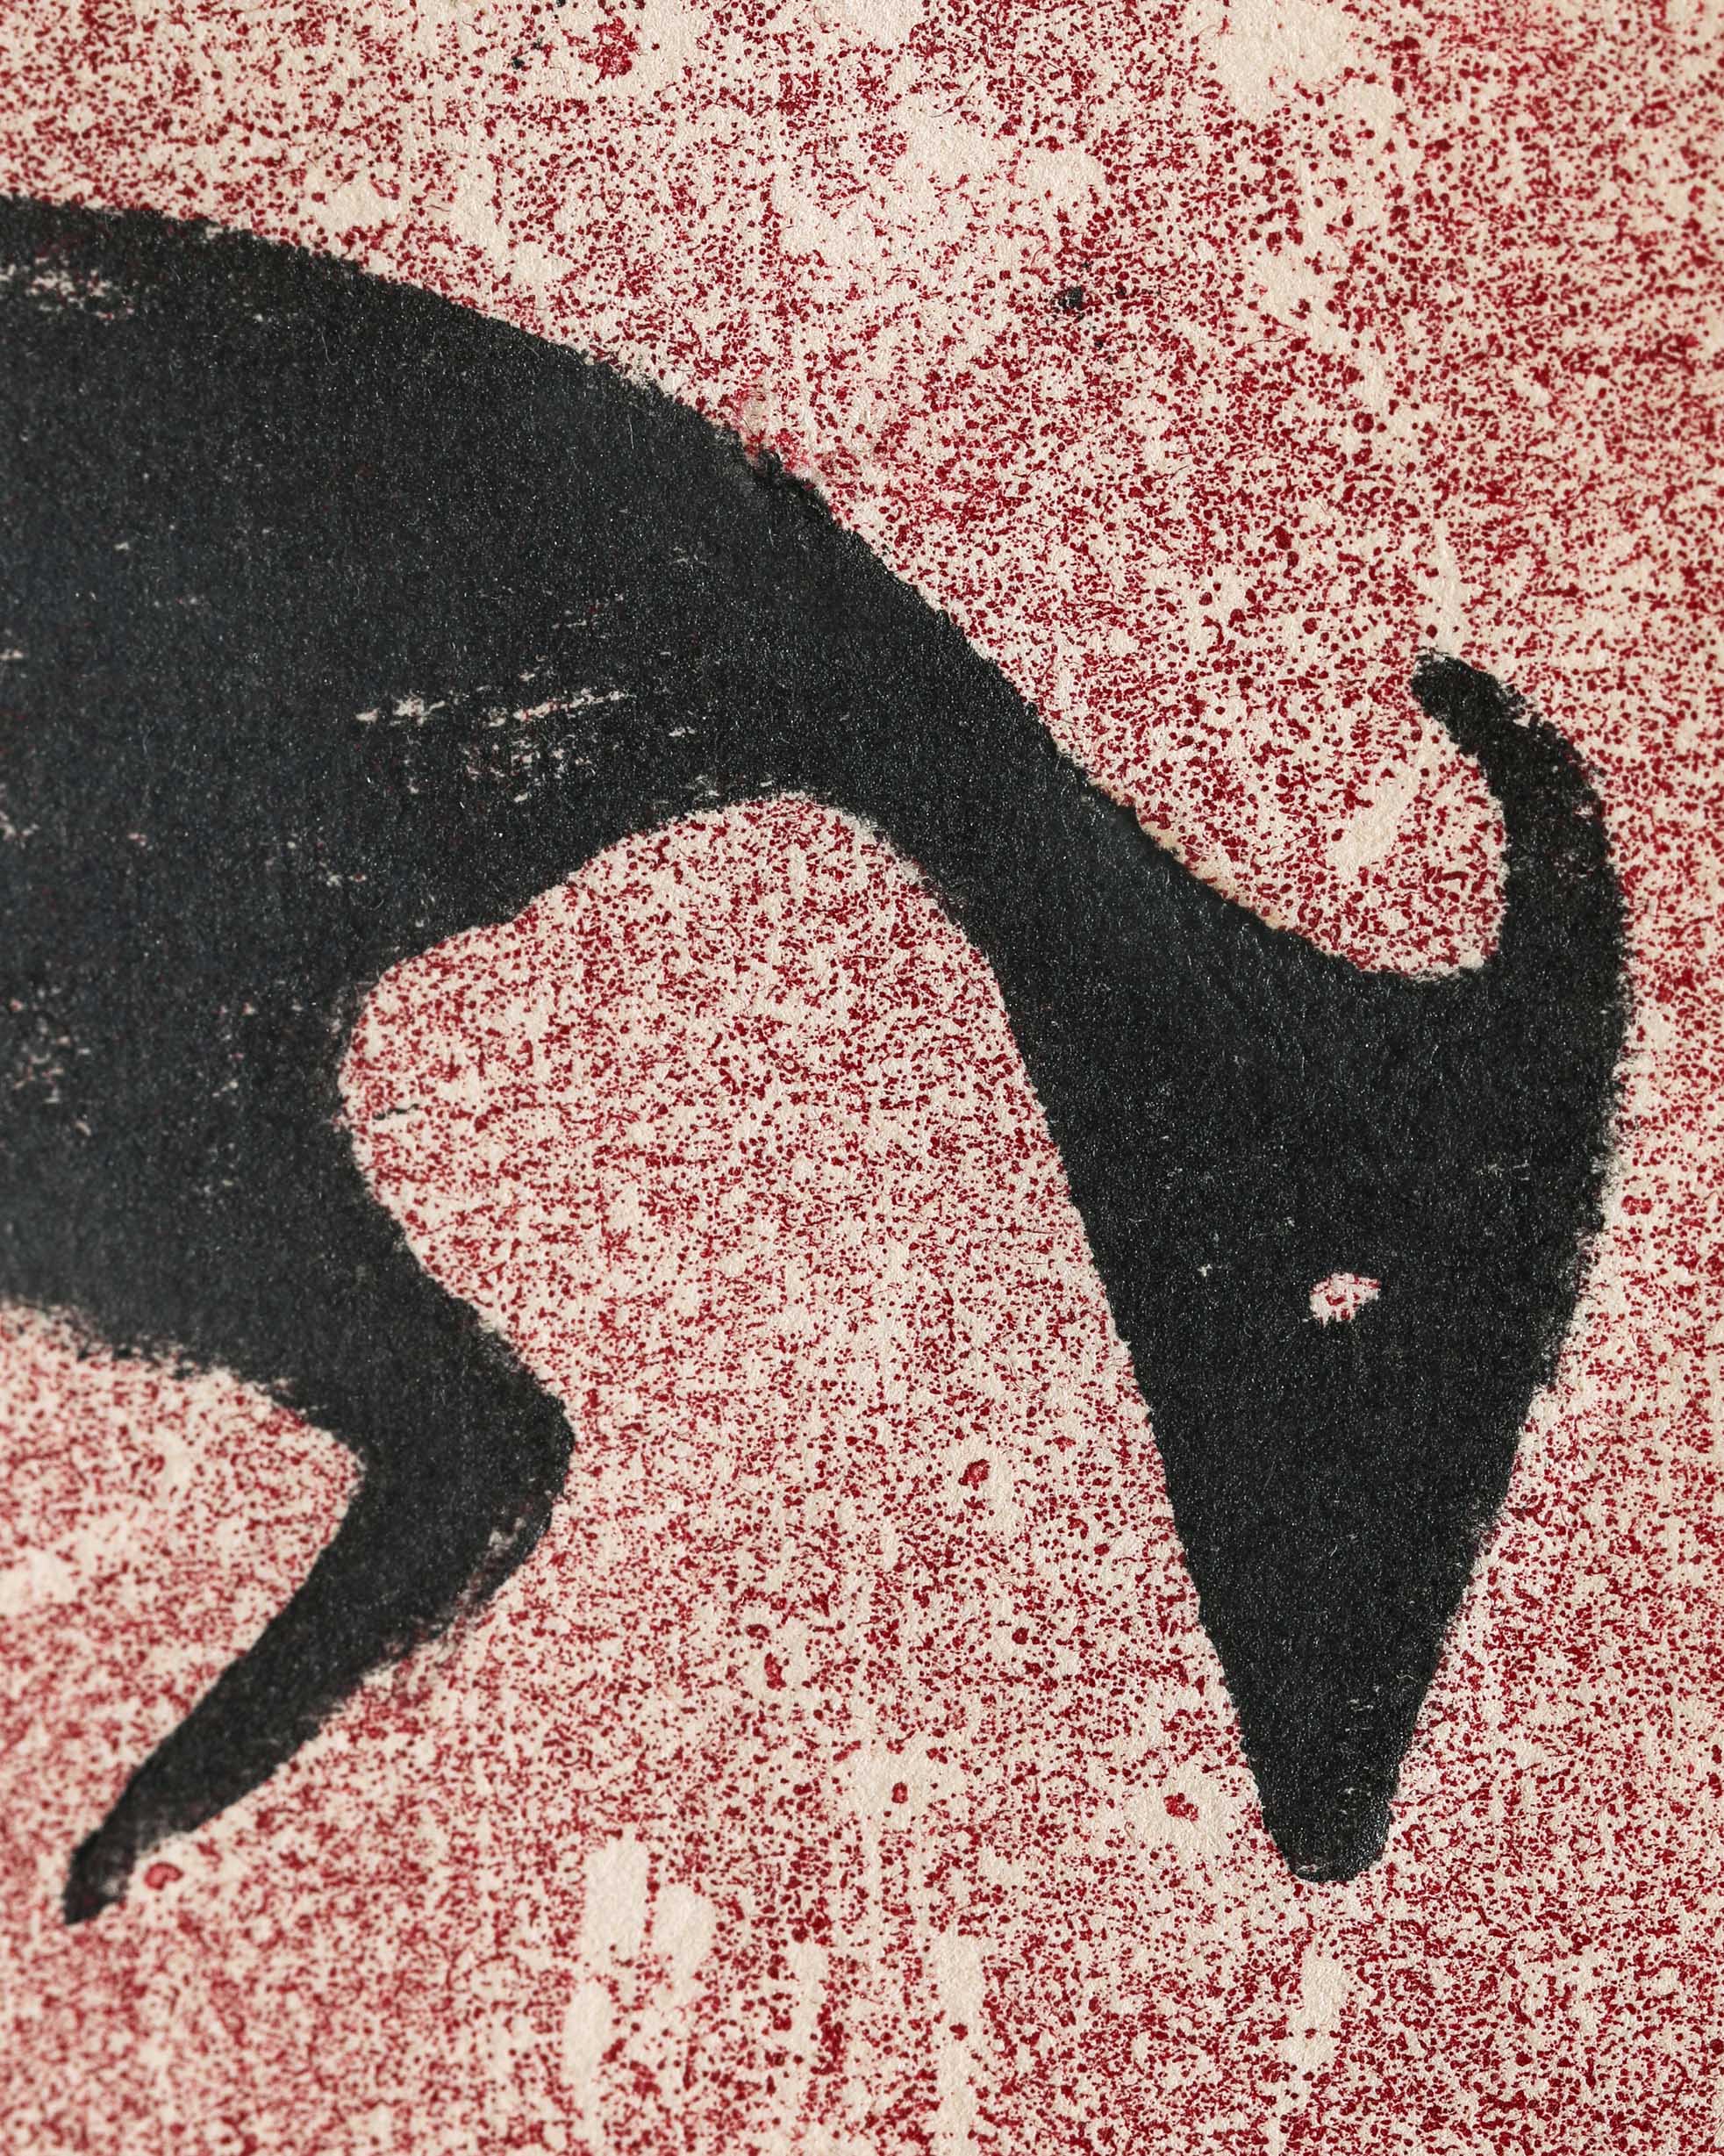 Ewald Mataré*, Liegende Kuh (nach rechts), 1958, Color woodcut - Image 5 of 7